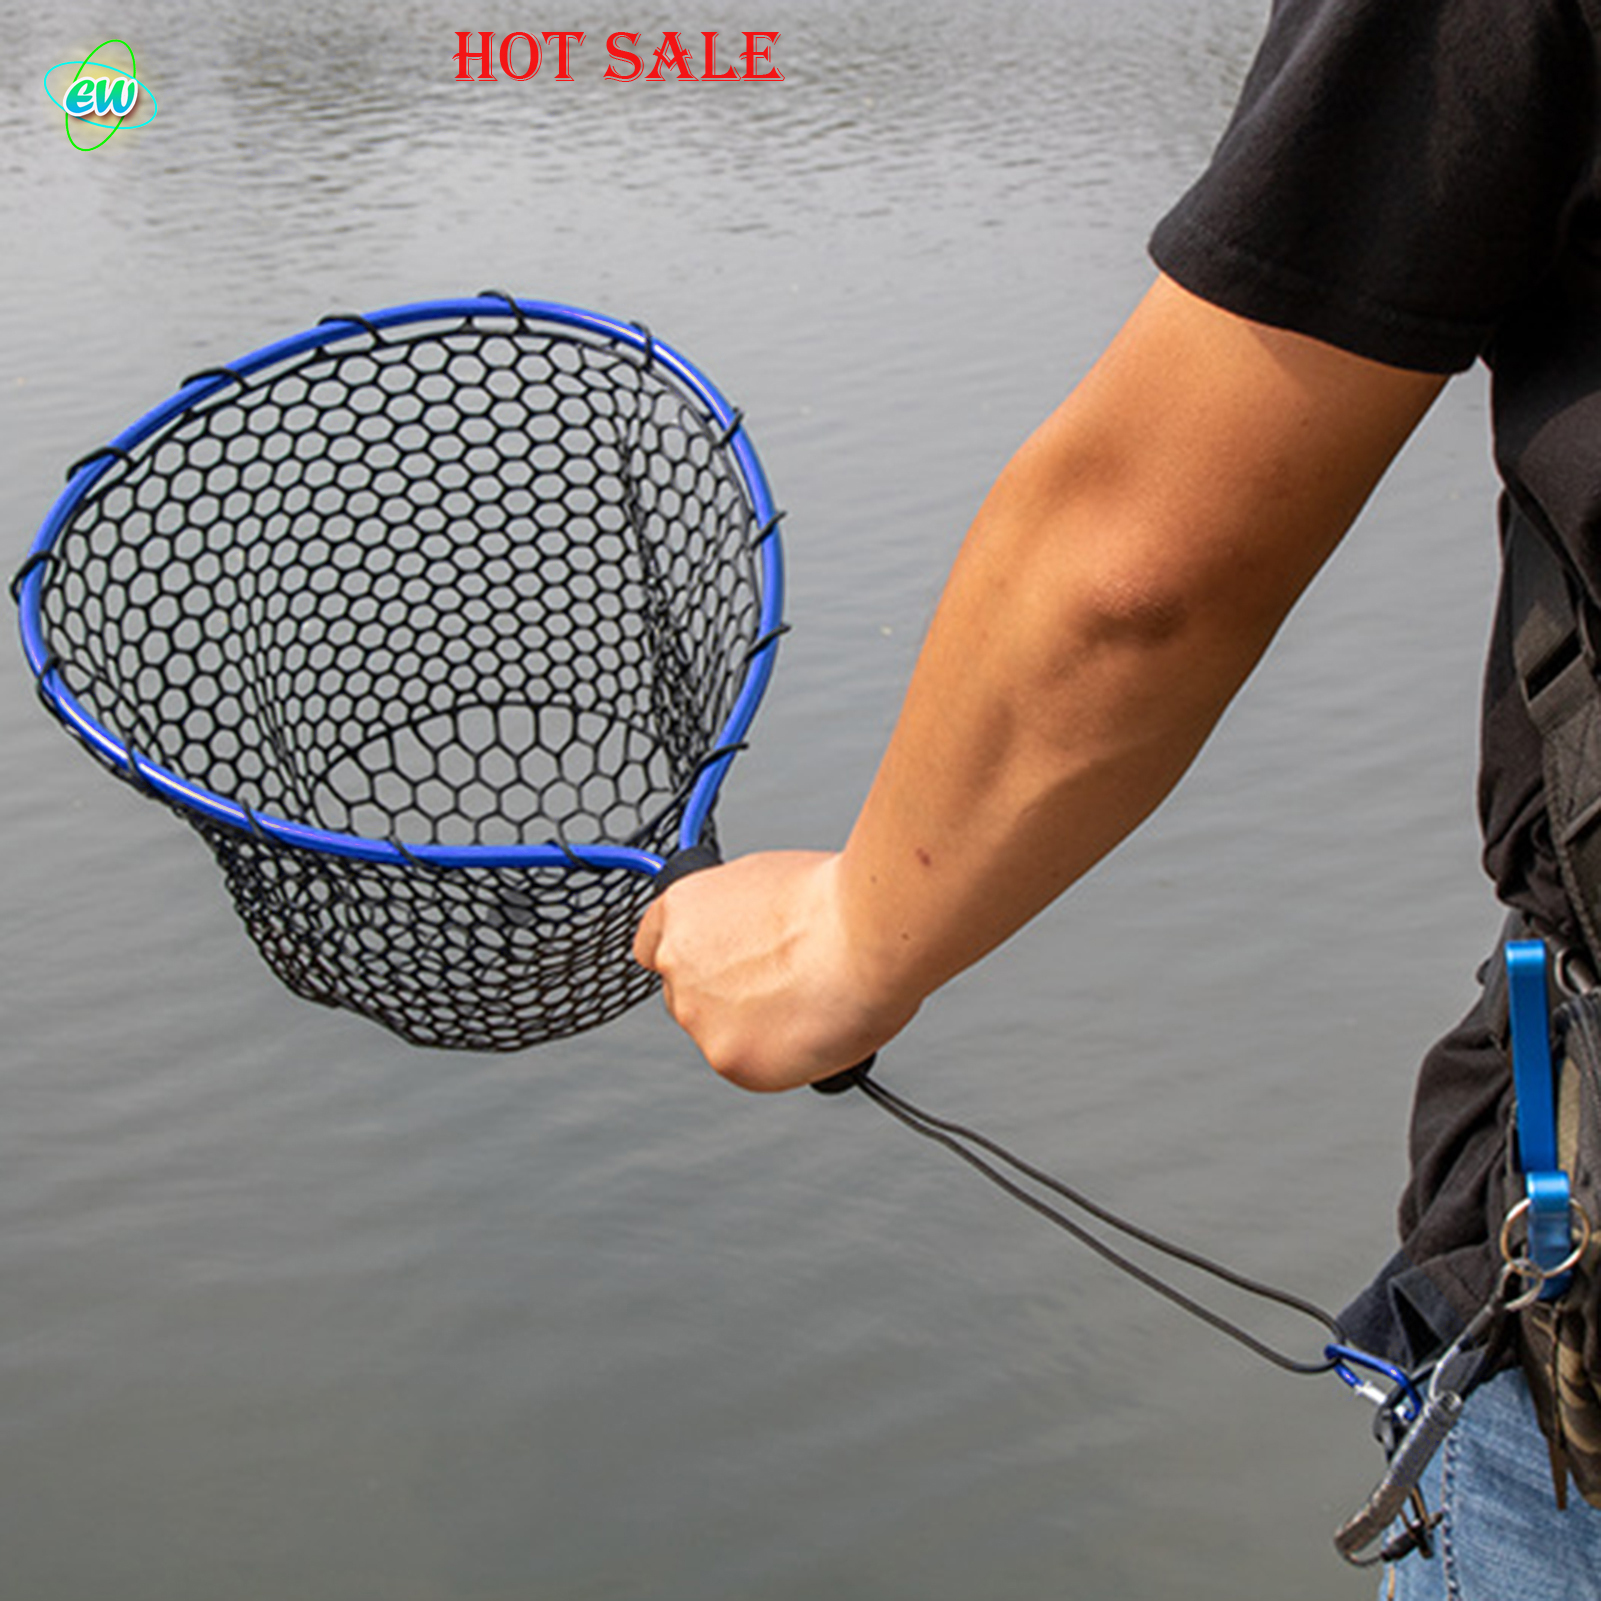 Rubber Fishing Net Quick Catch Fishing Net with Aluminum Handle